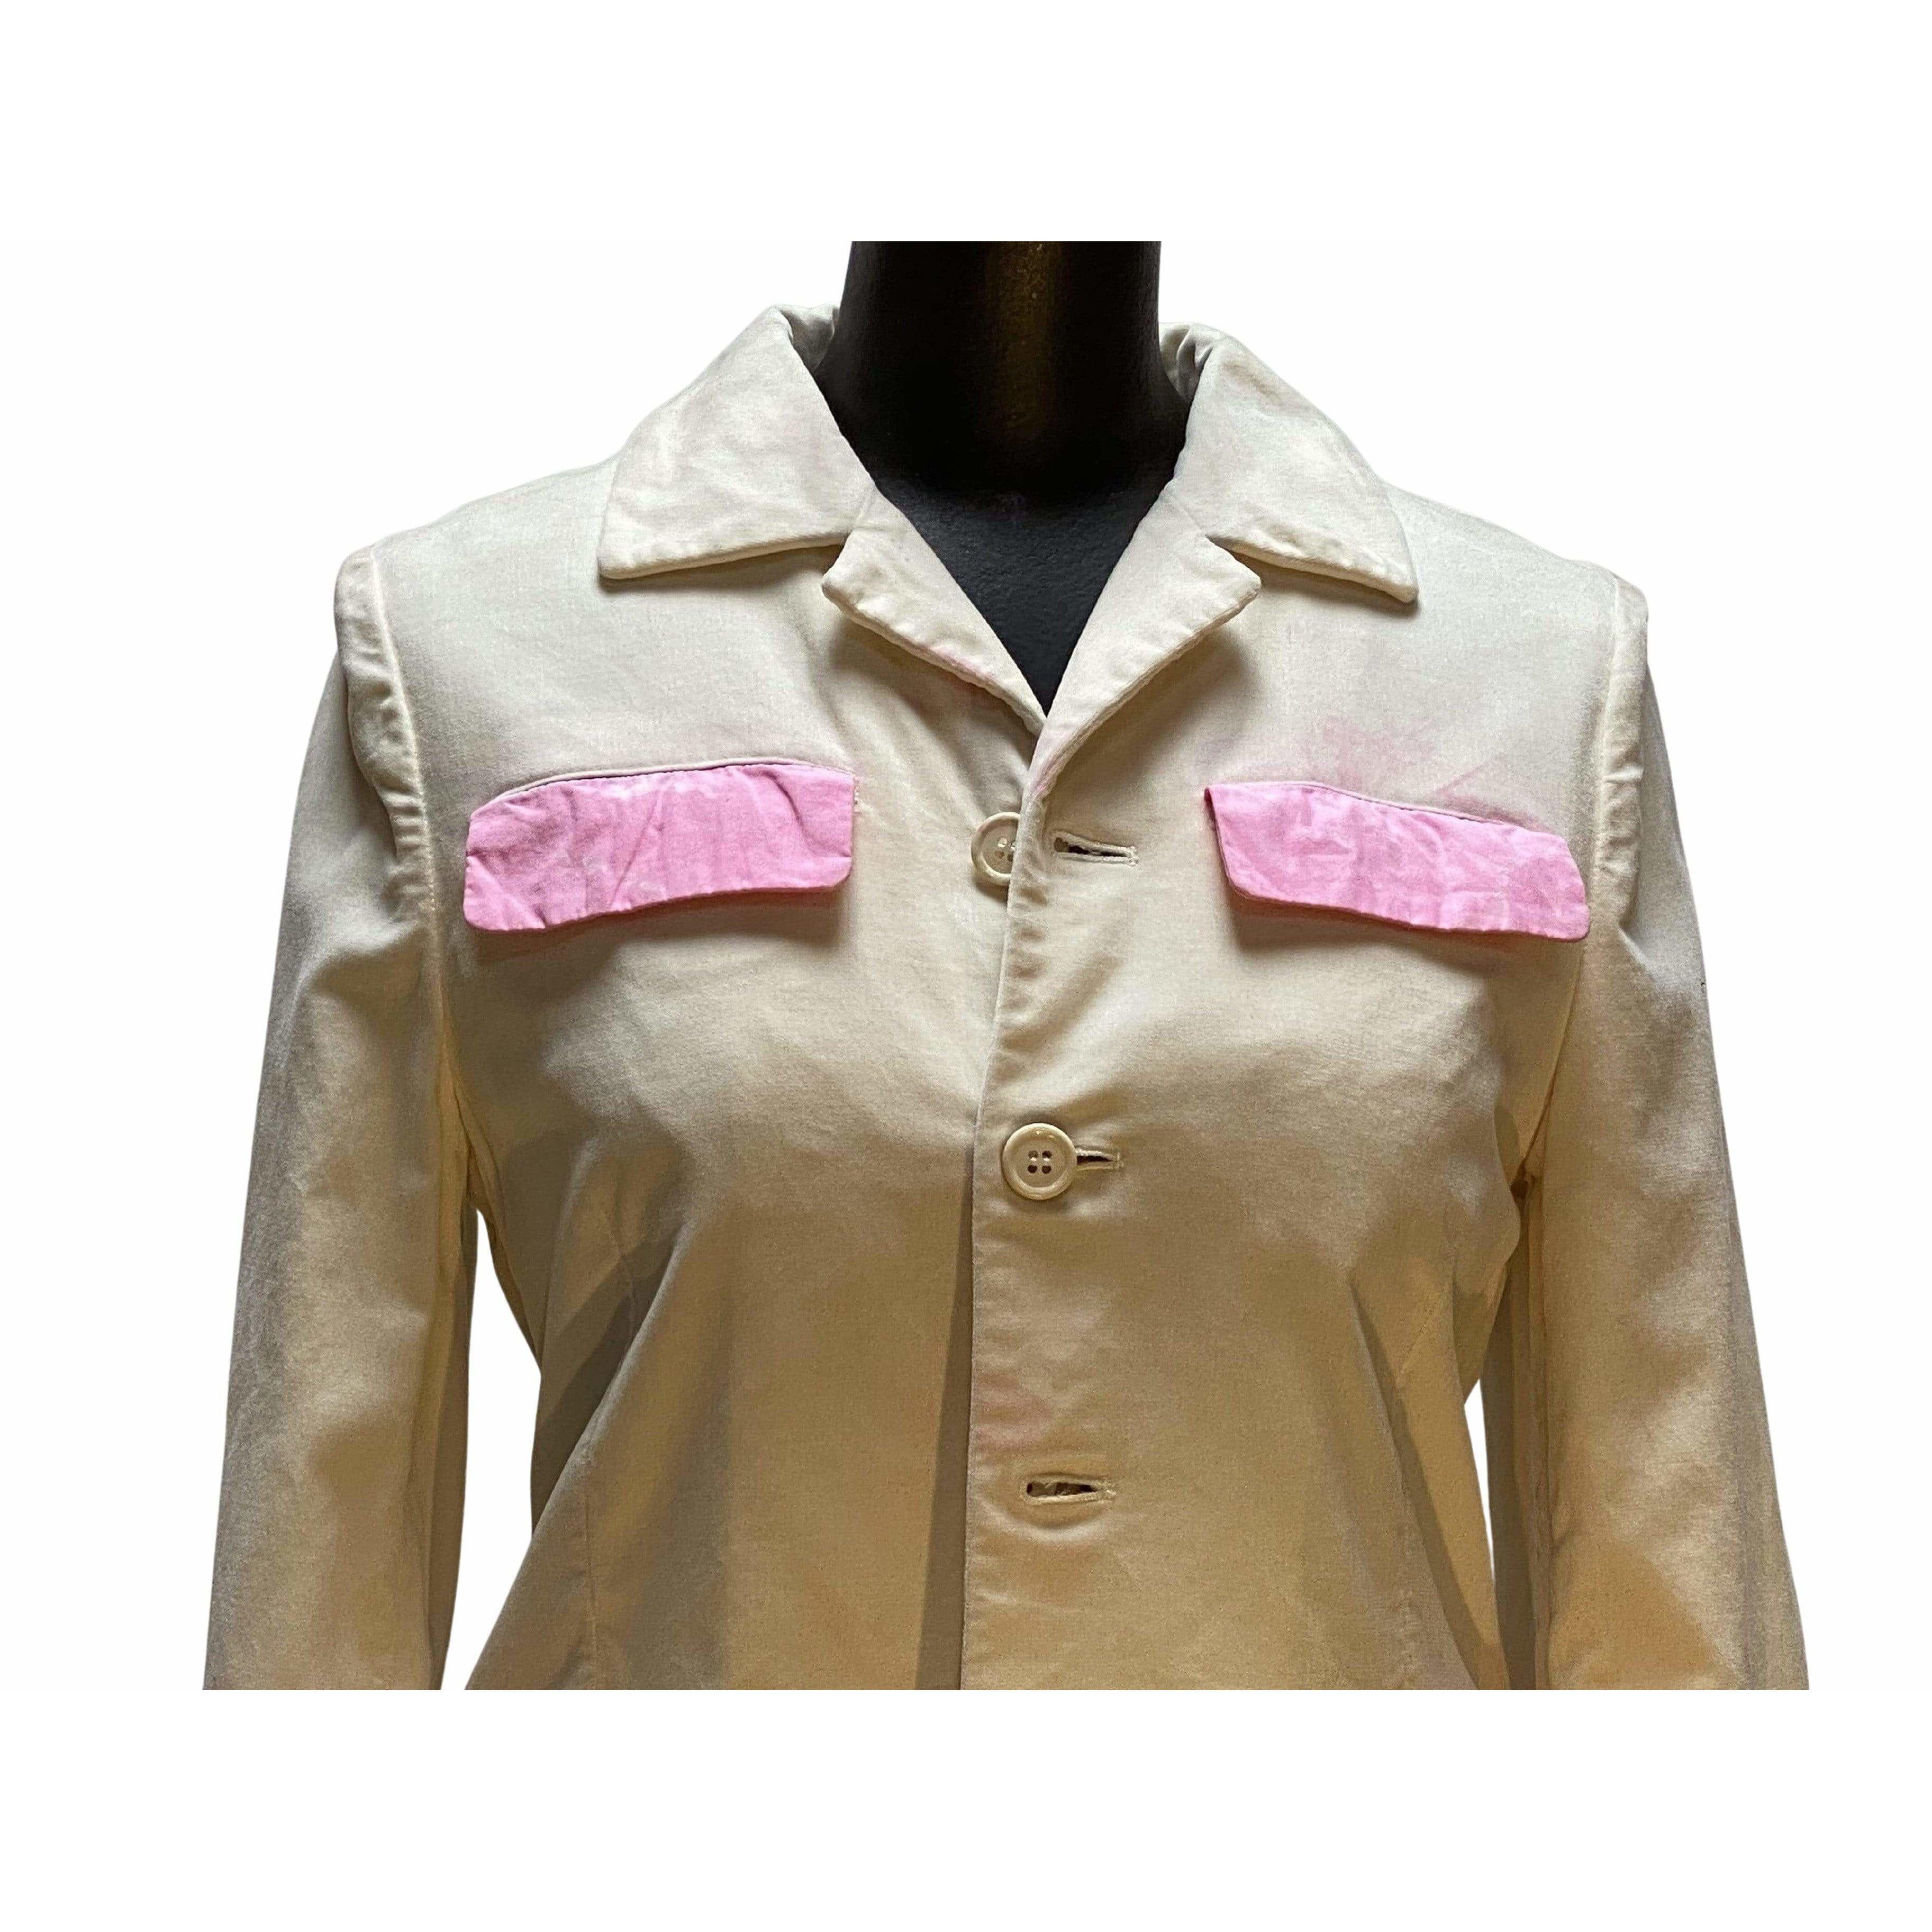 Comme Des Garçons Velvet Jacket In New Condition For Sale In Laguna Beach, CA